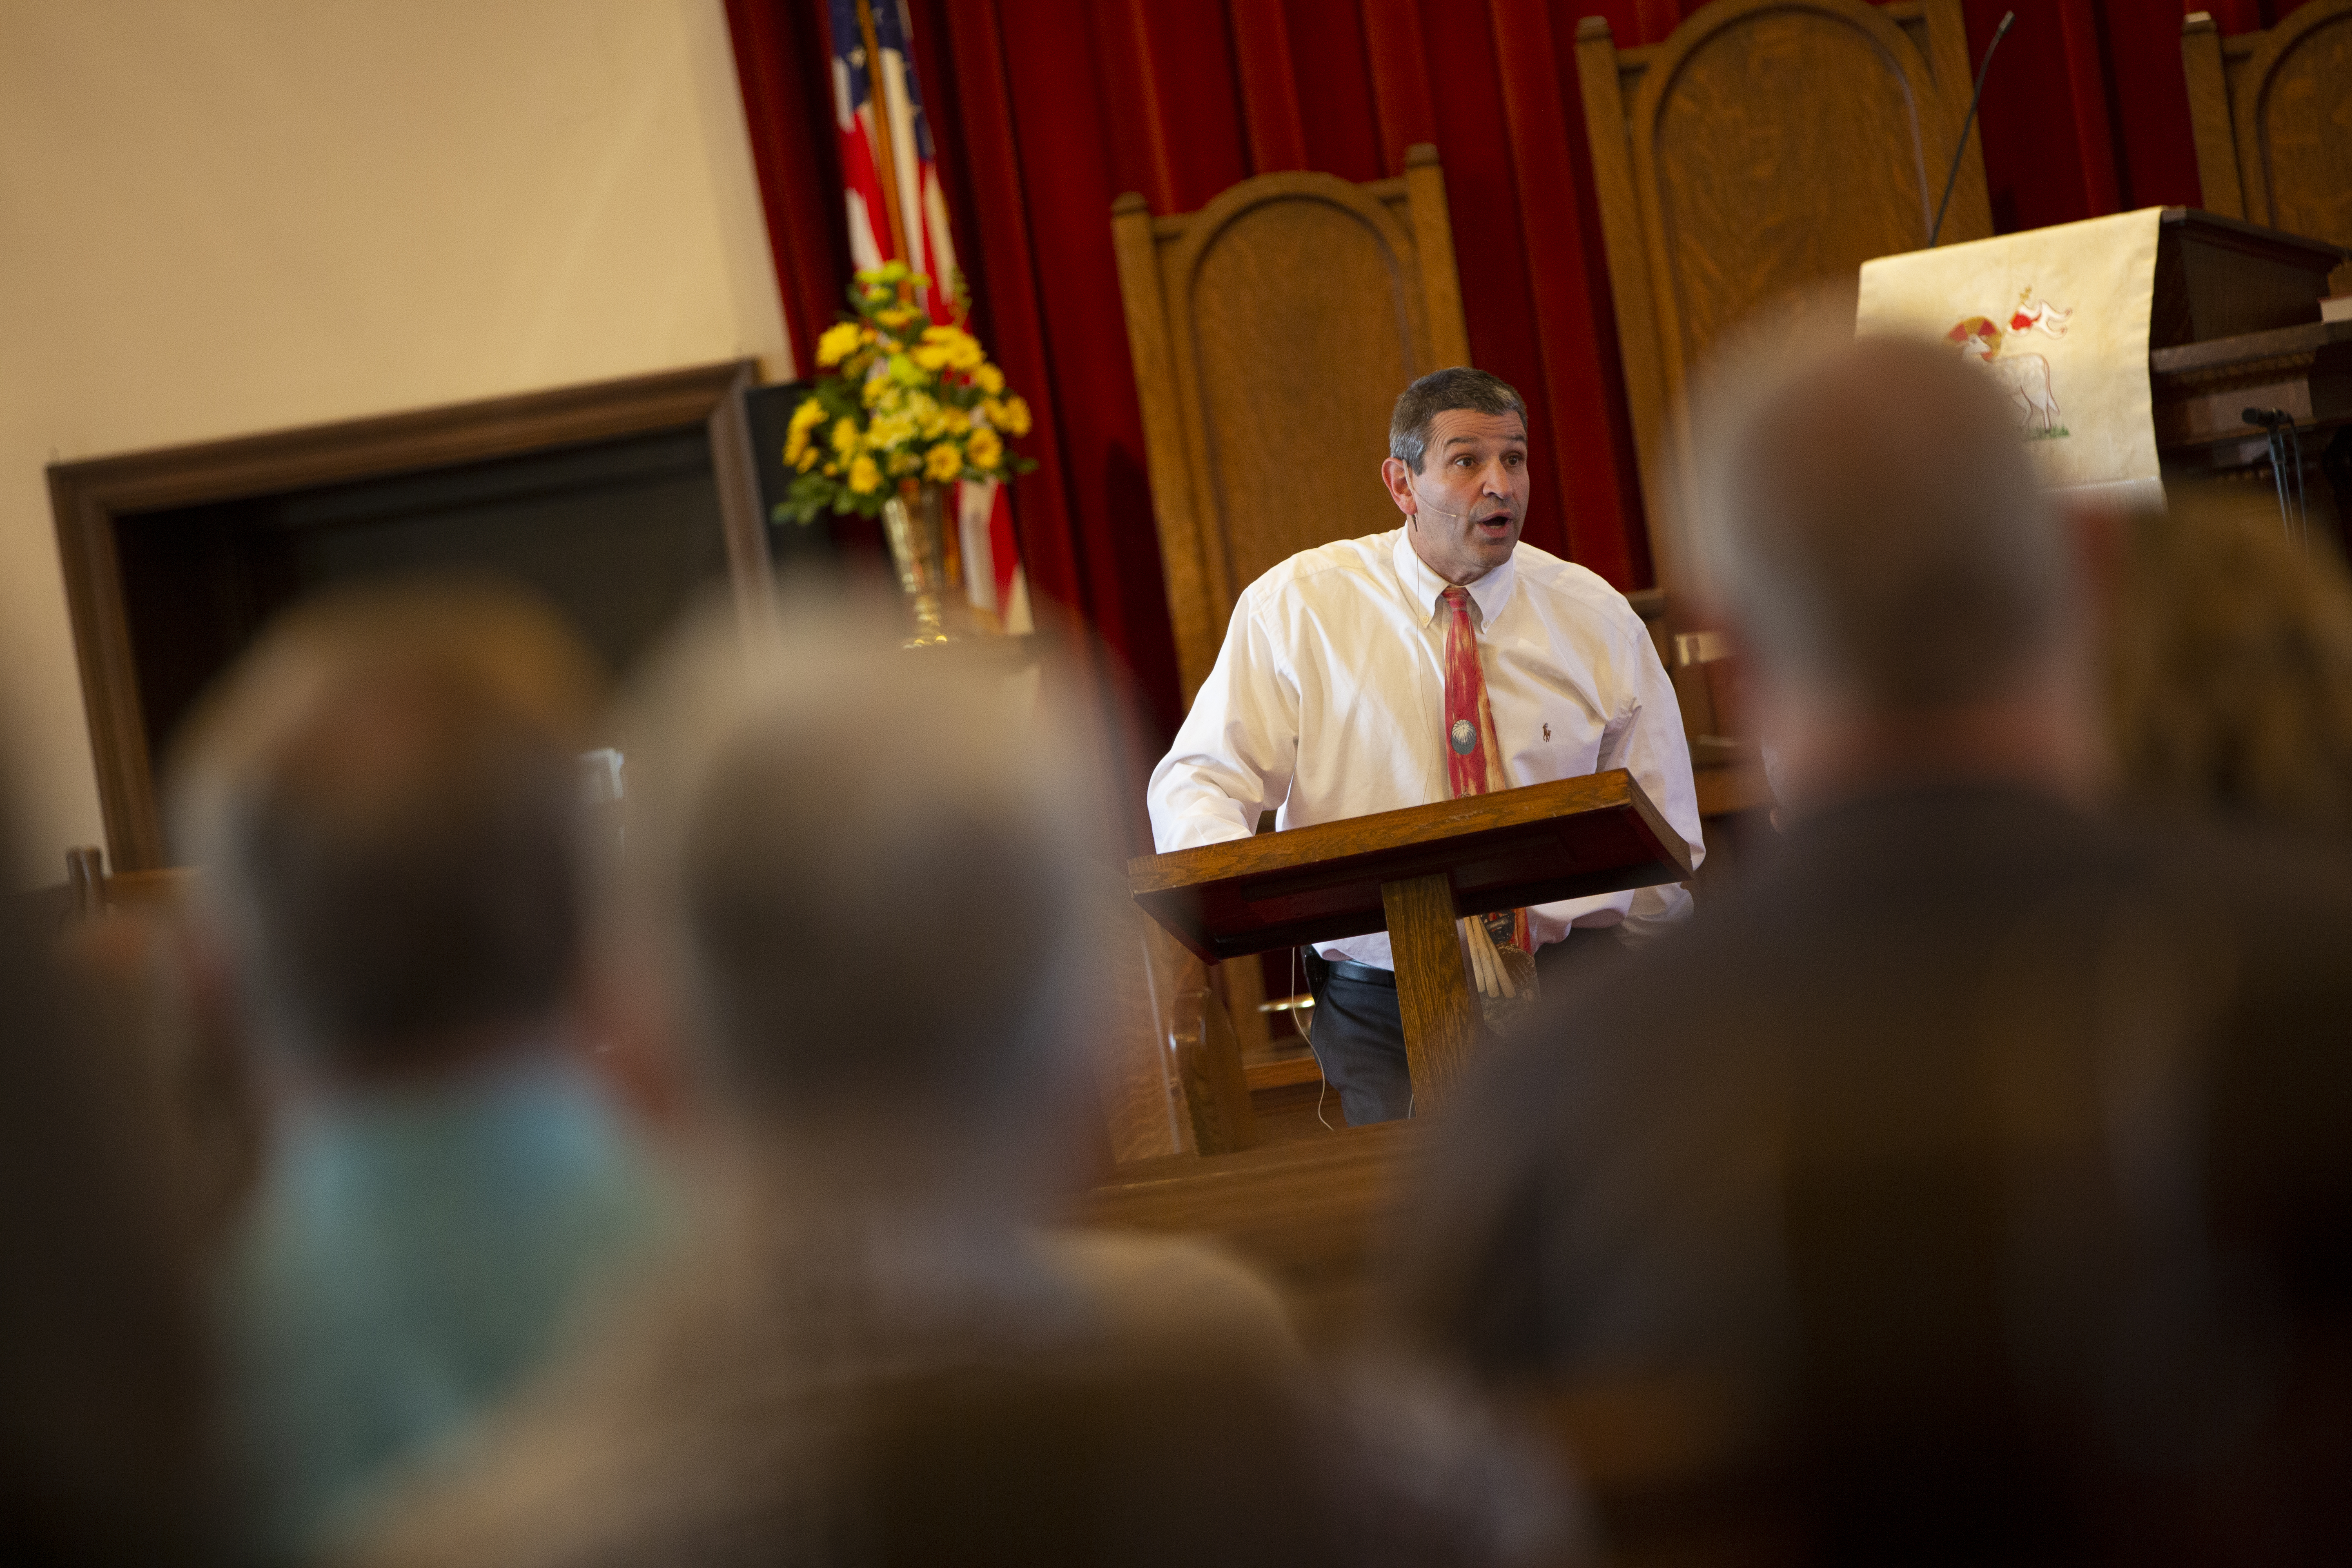 Pastor John Preaching - with congregation